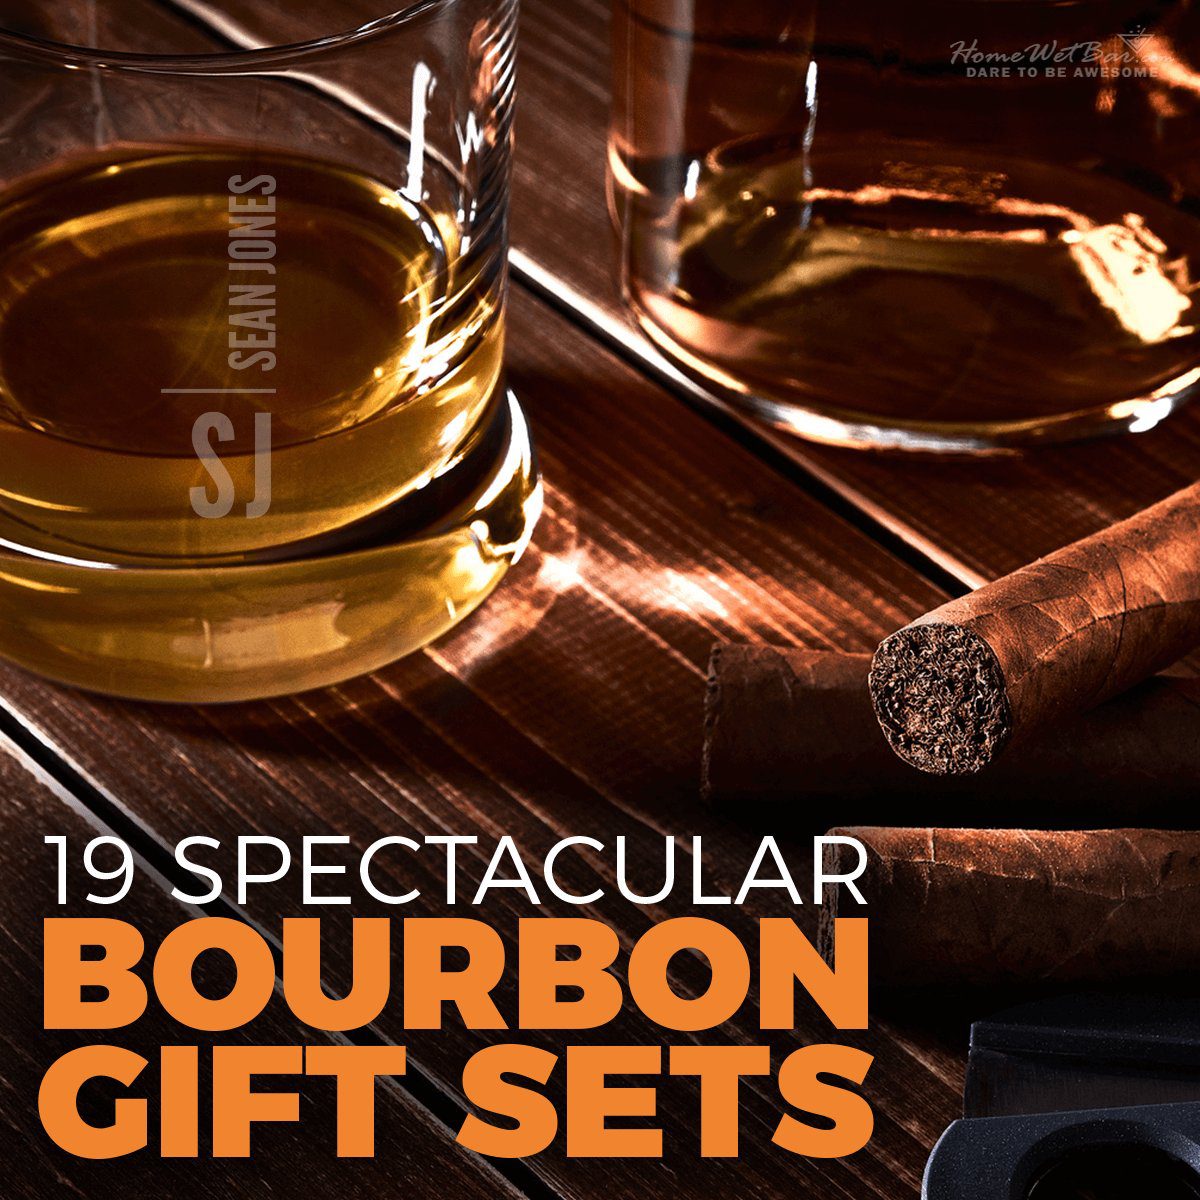 19 Spectacular Bourbon Gift Sets